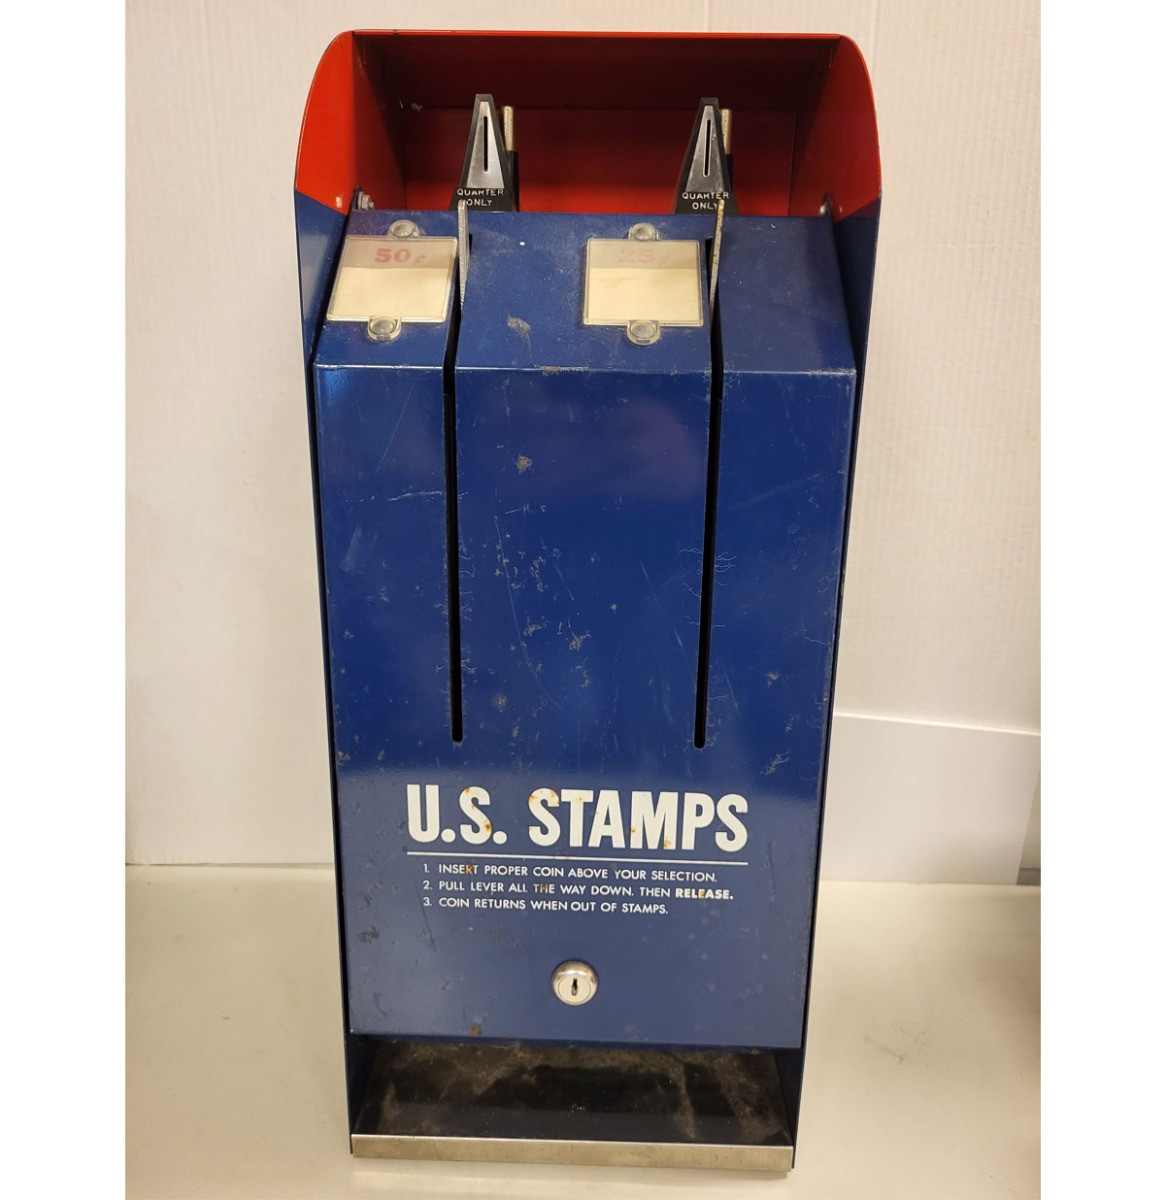 U.S. Postage Stamps Automaat - Origineel